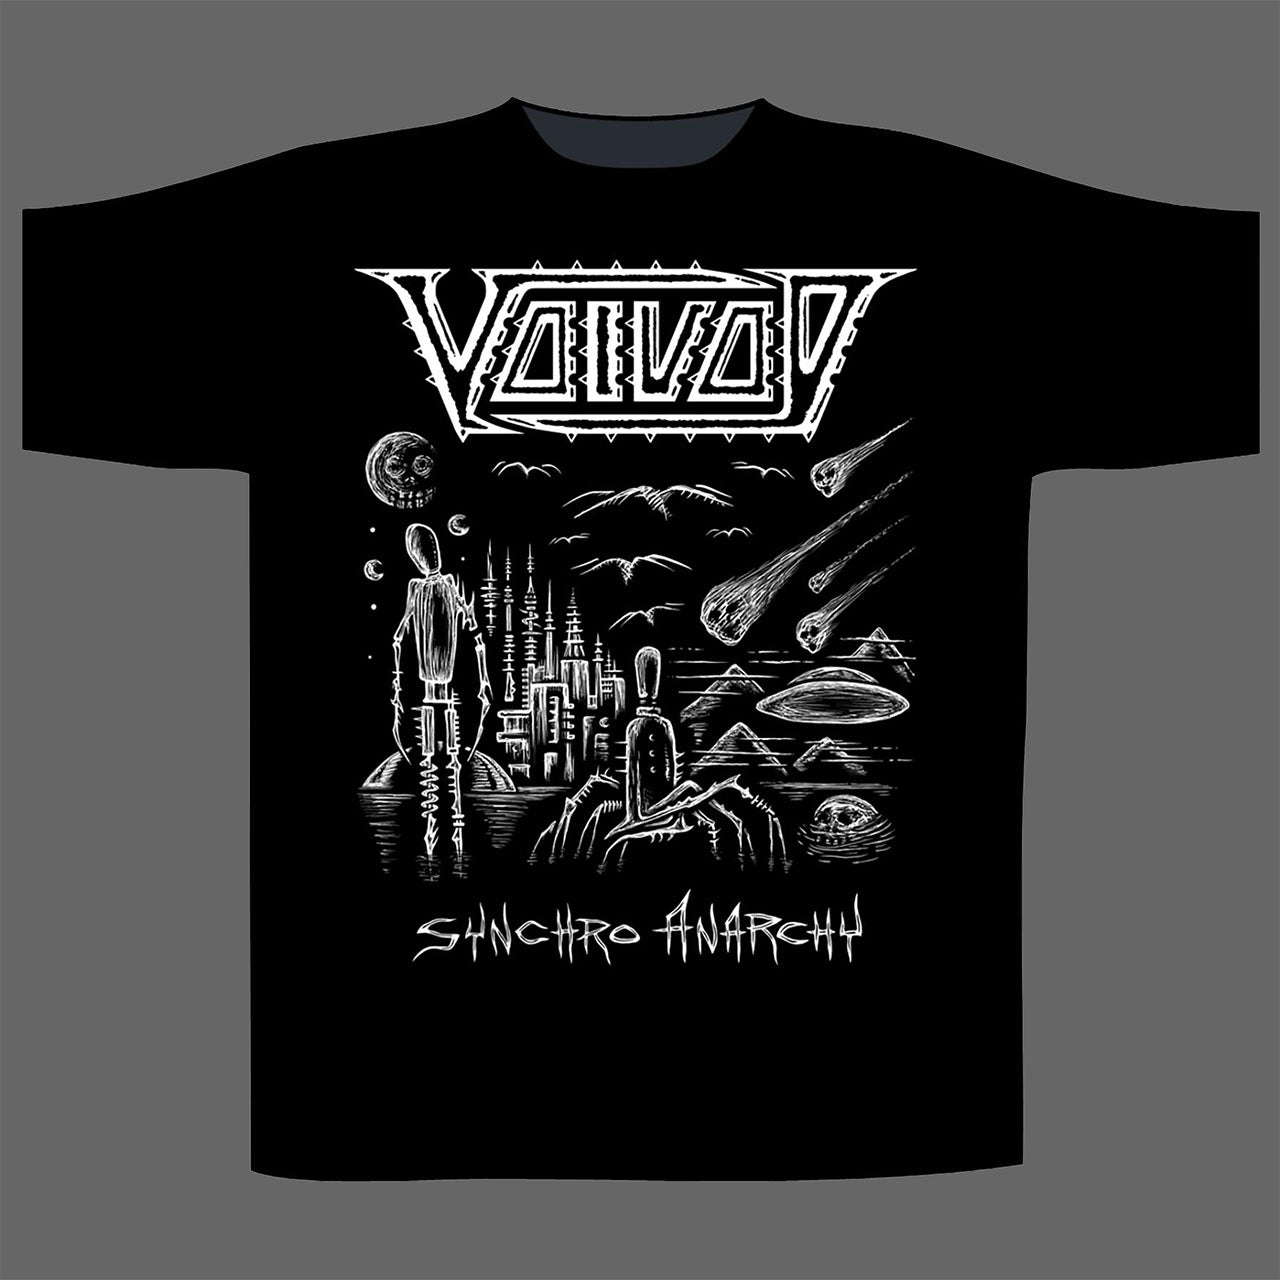 Voivod - Synchro Anarchy (T-Shirt)